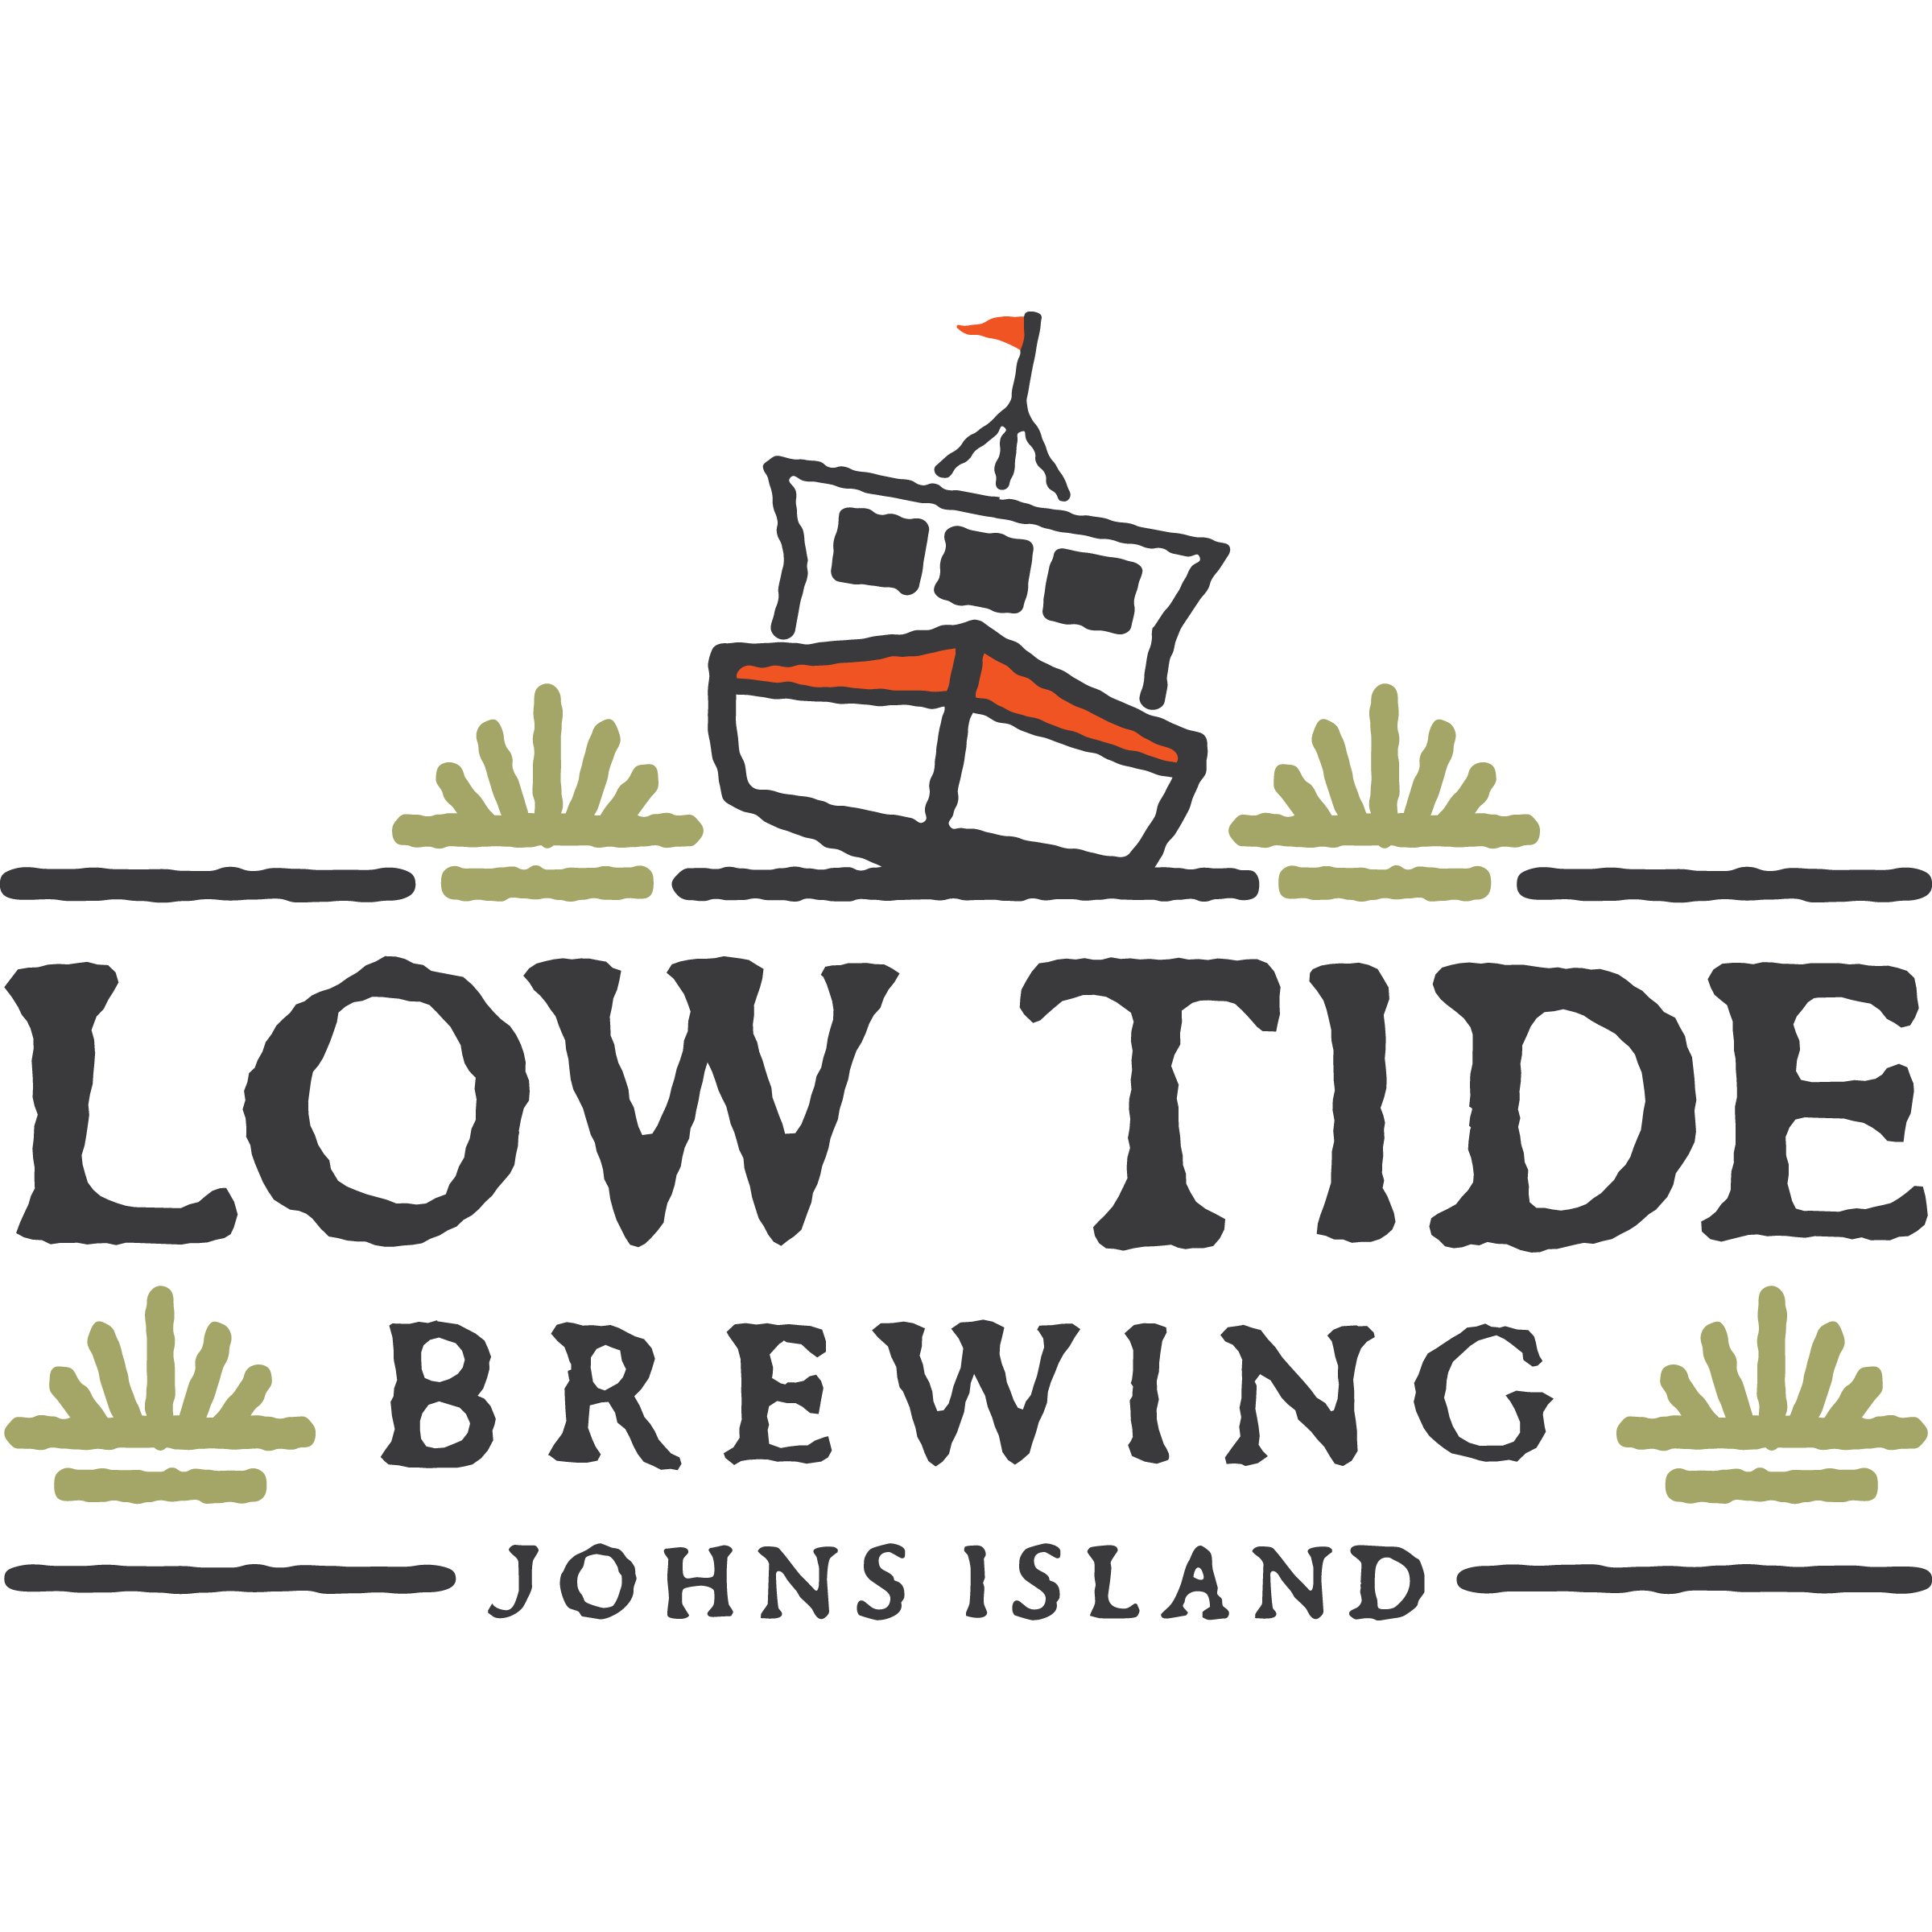 low tide brewing johns island sc